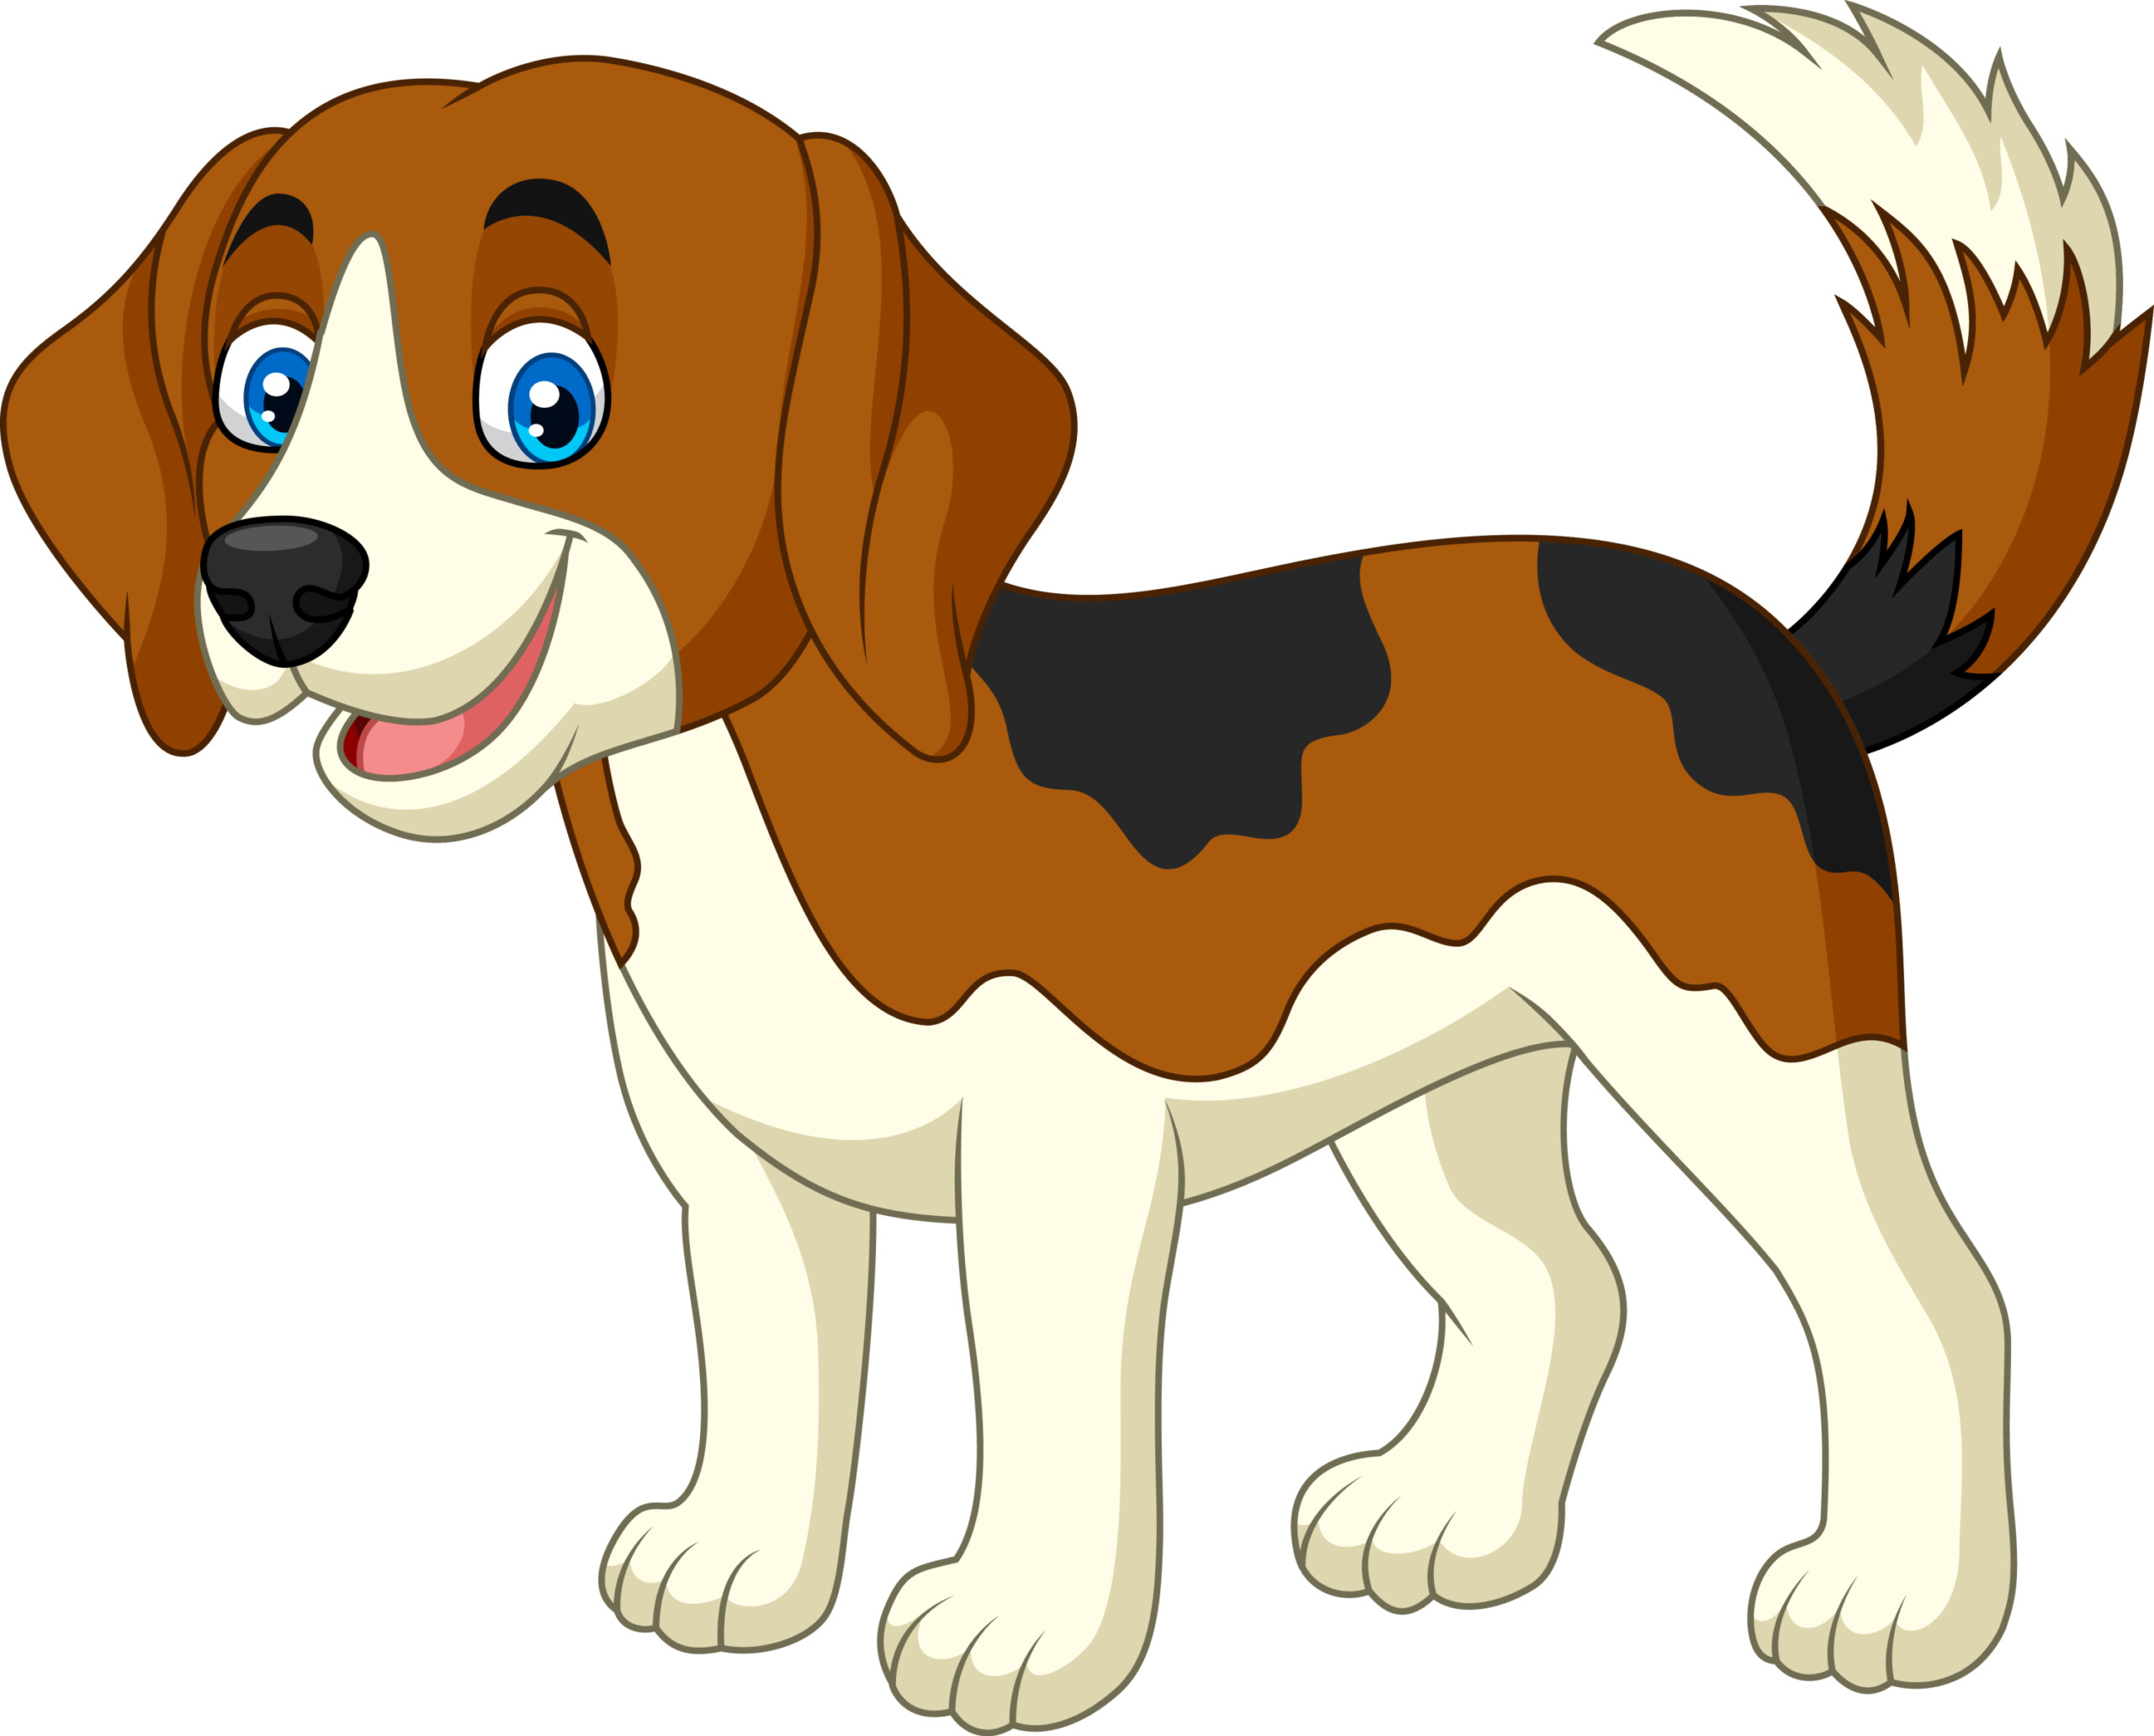 Beagle Dog - Original image